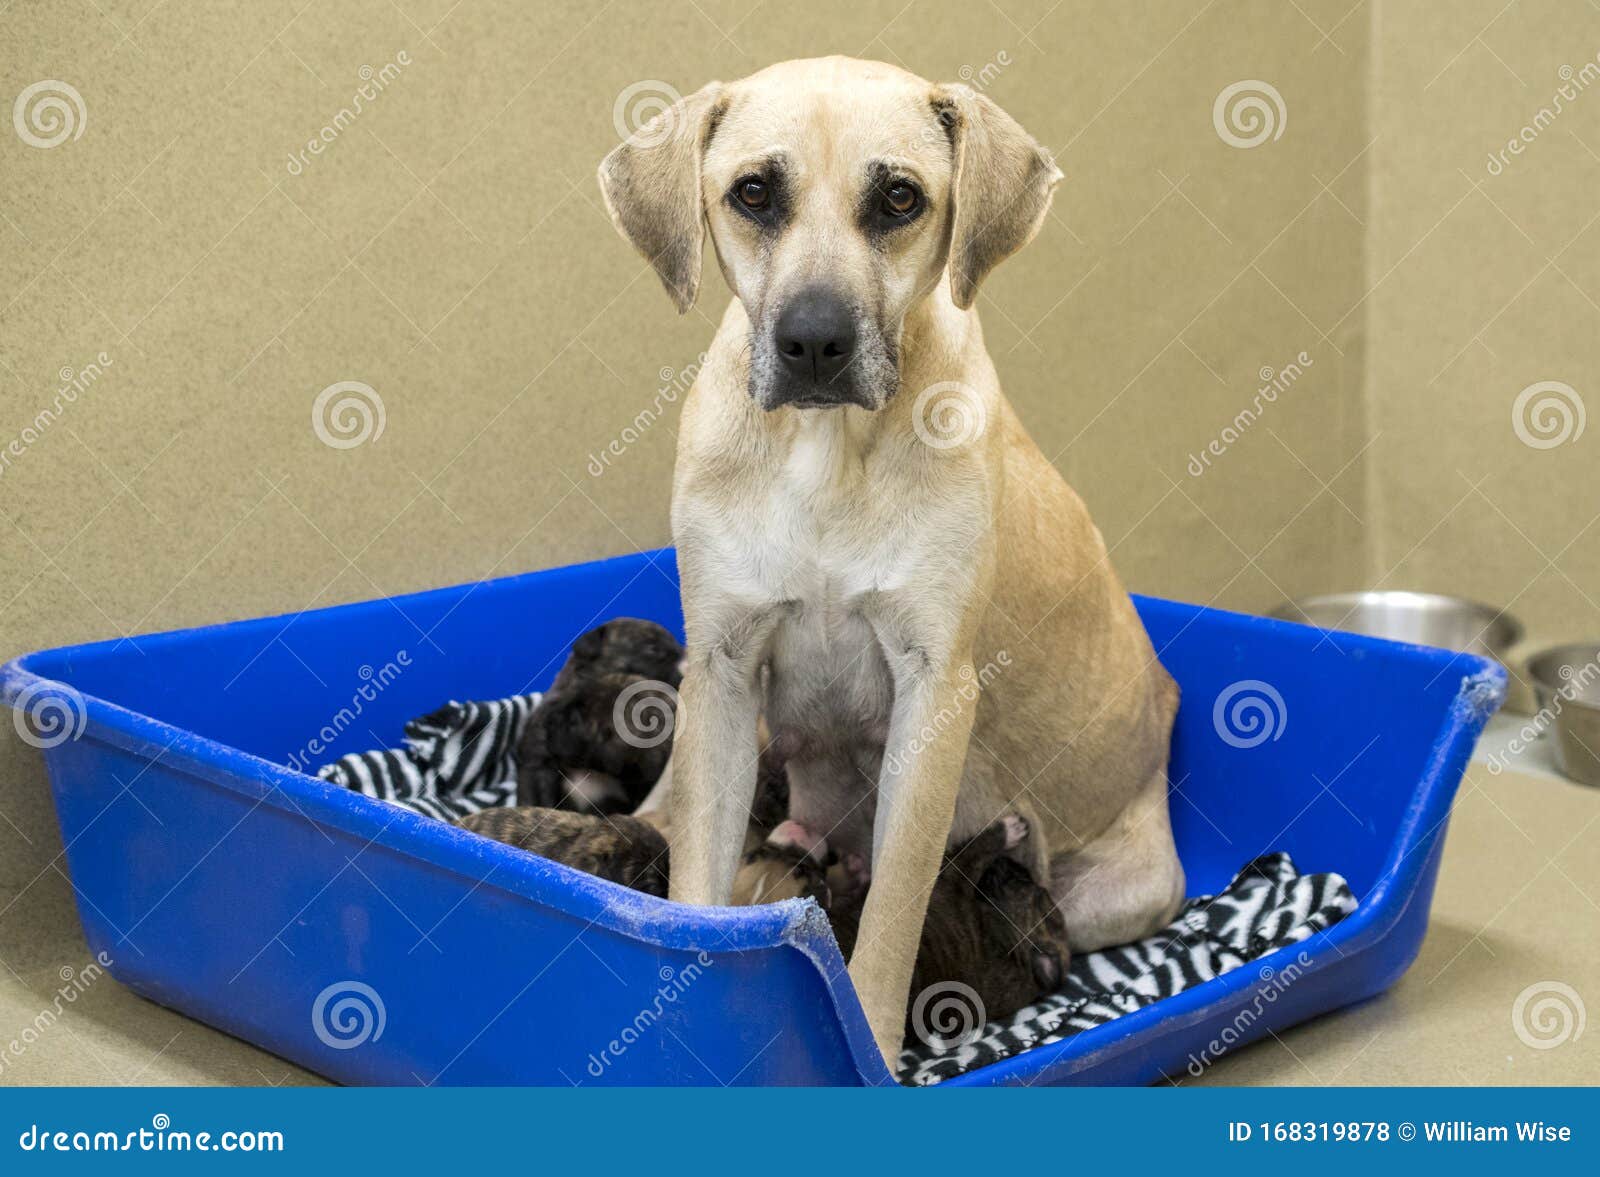 Great Dane Mix Dog Nursing Puppies In Whelping Box Stock Photo Image Of Pound Puppy 168319878